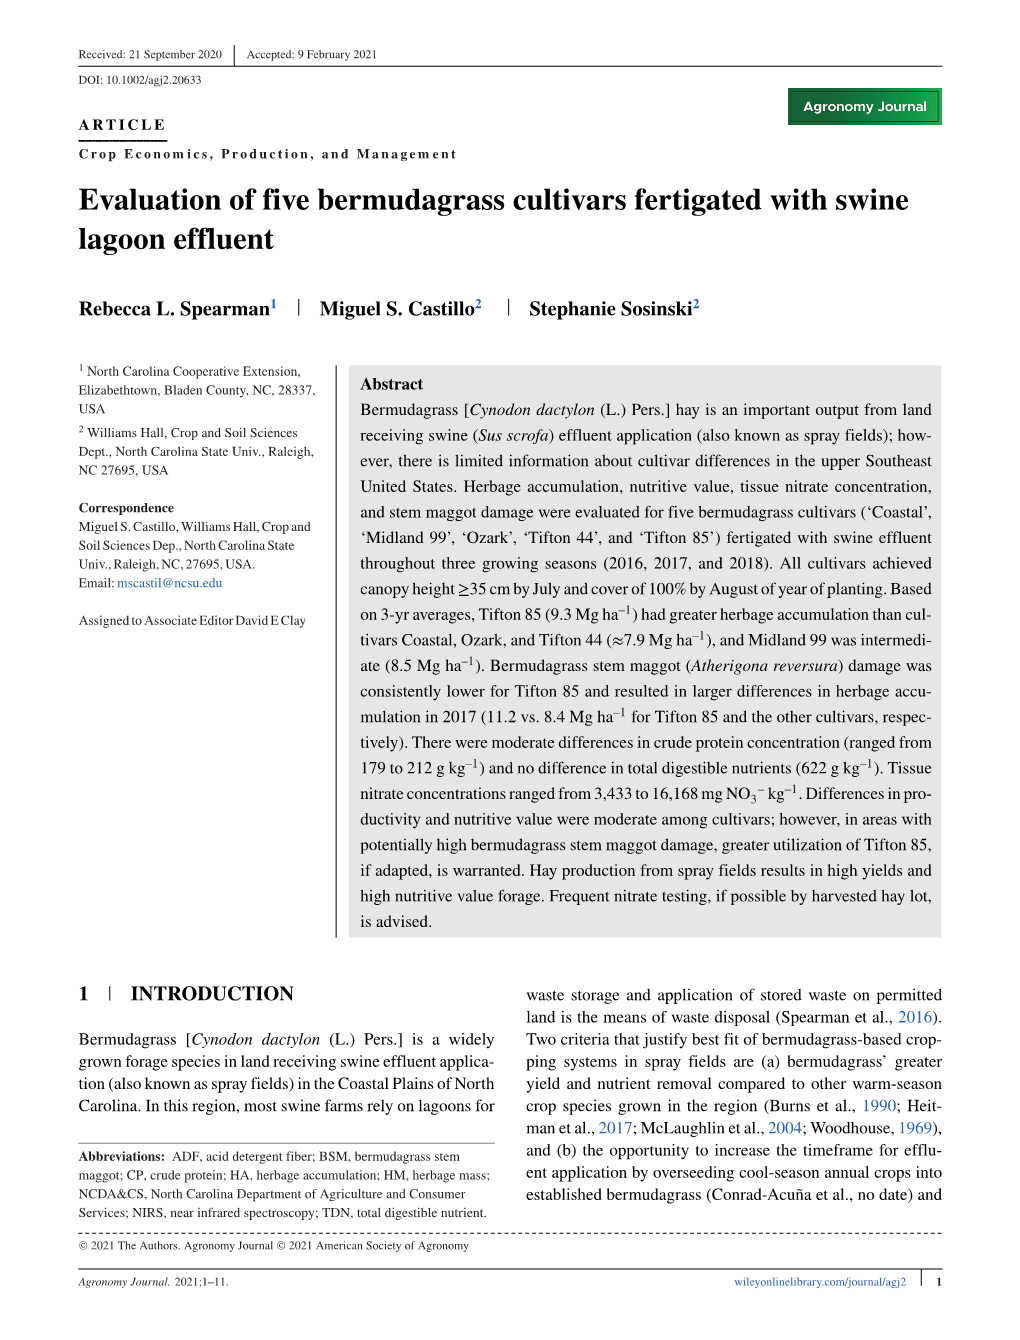 Evaluation of Five Bermudagrass Cultivars Fertigated with Swine Lagoon Effluent